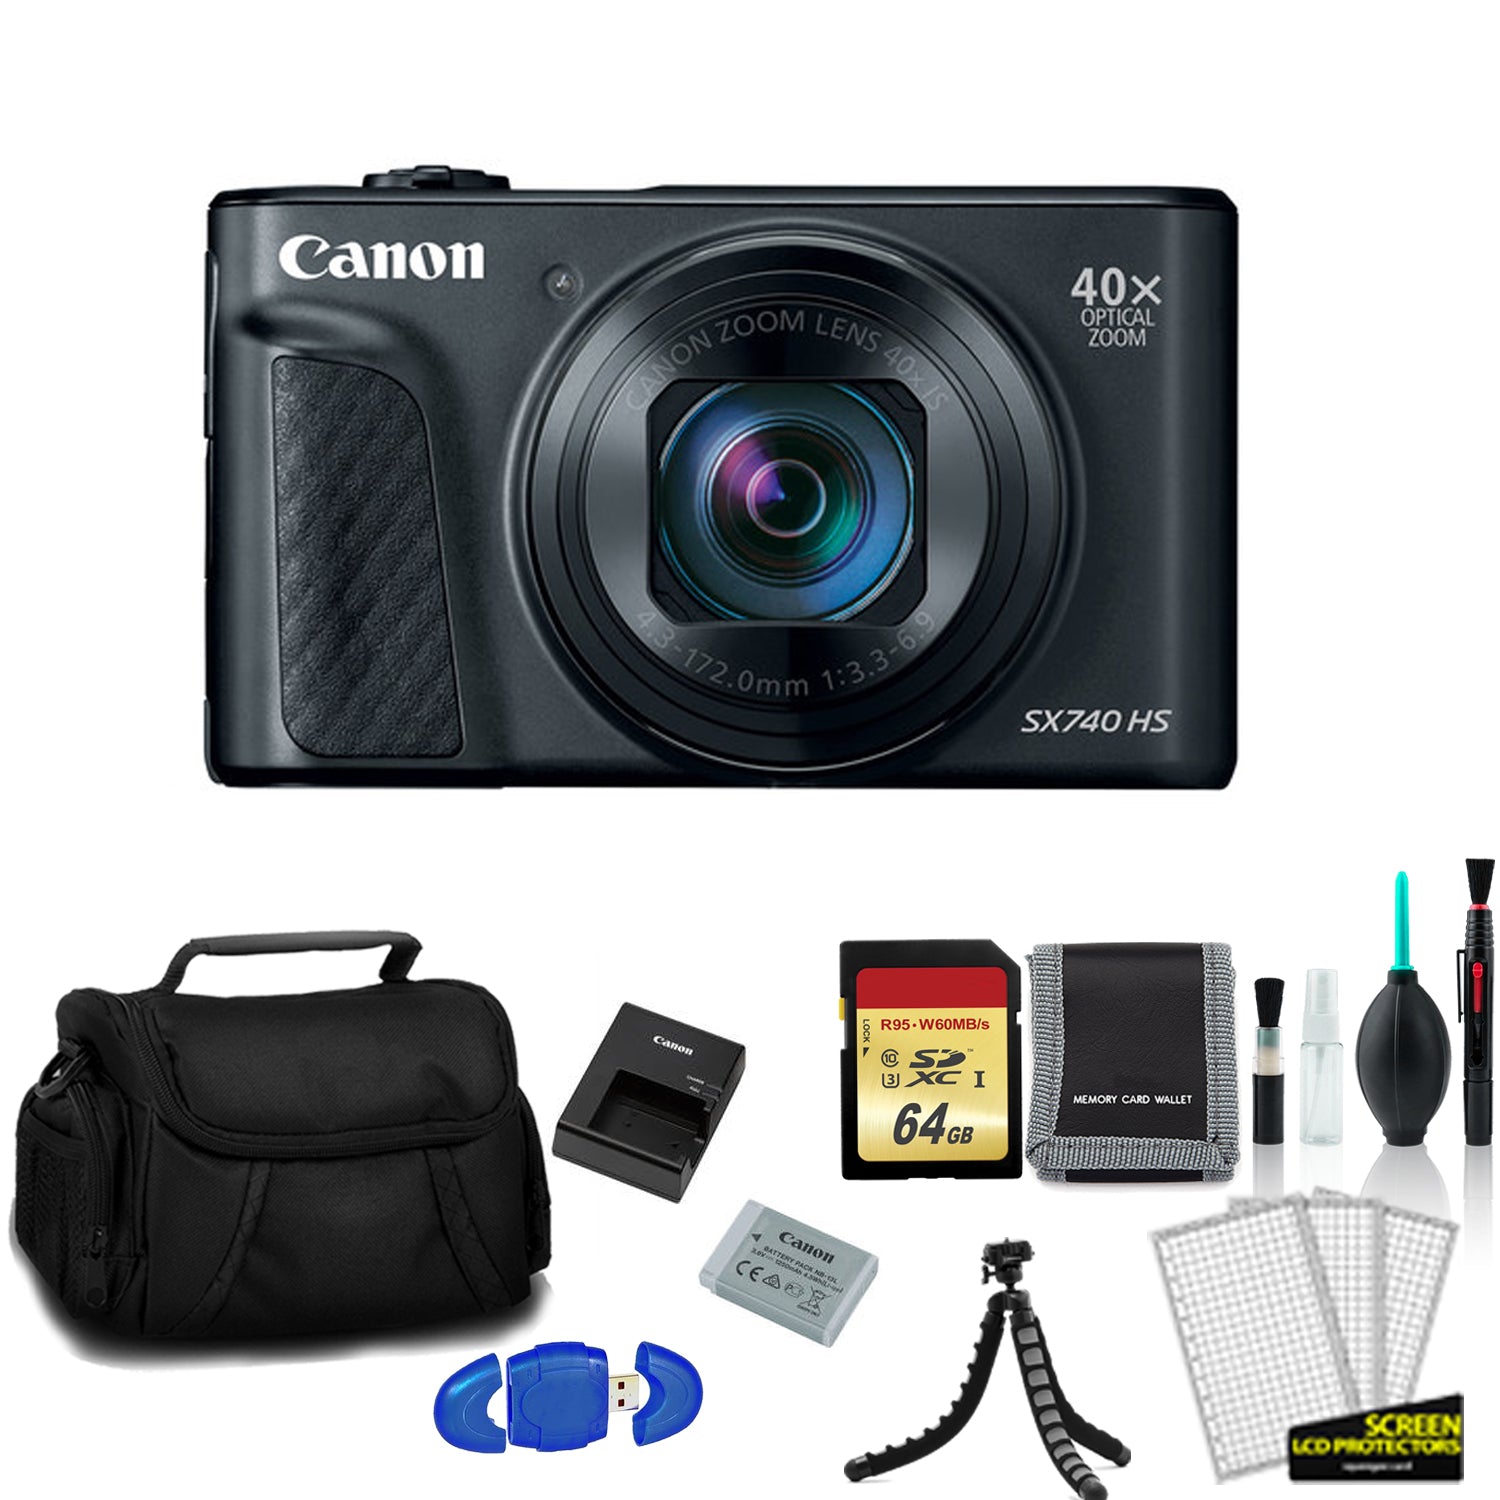 Canon PowerShot SX740 HS Digital Camera (Black) with 64GB Memory Card + More - International Model